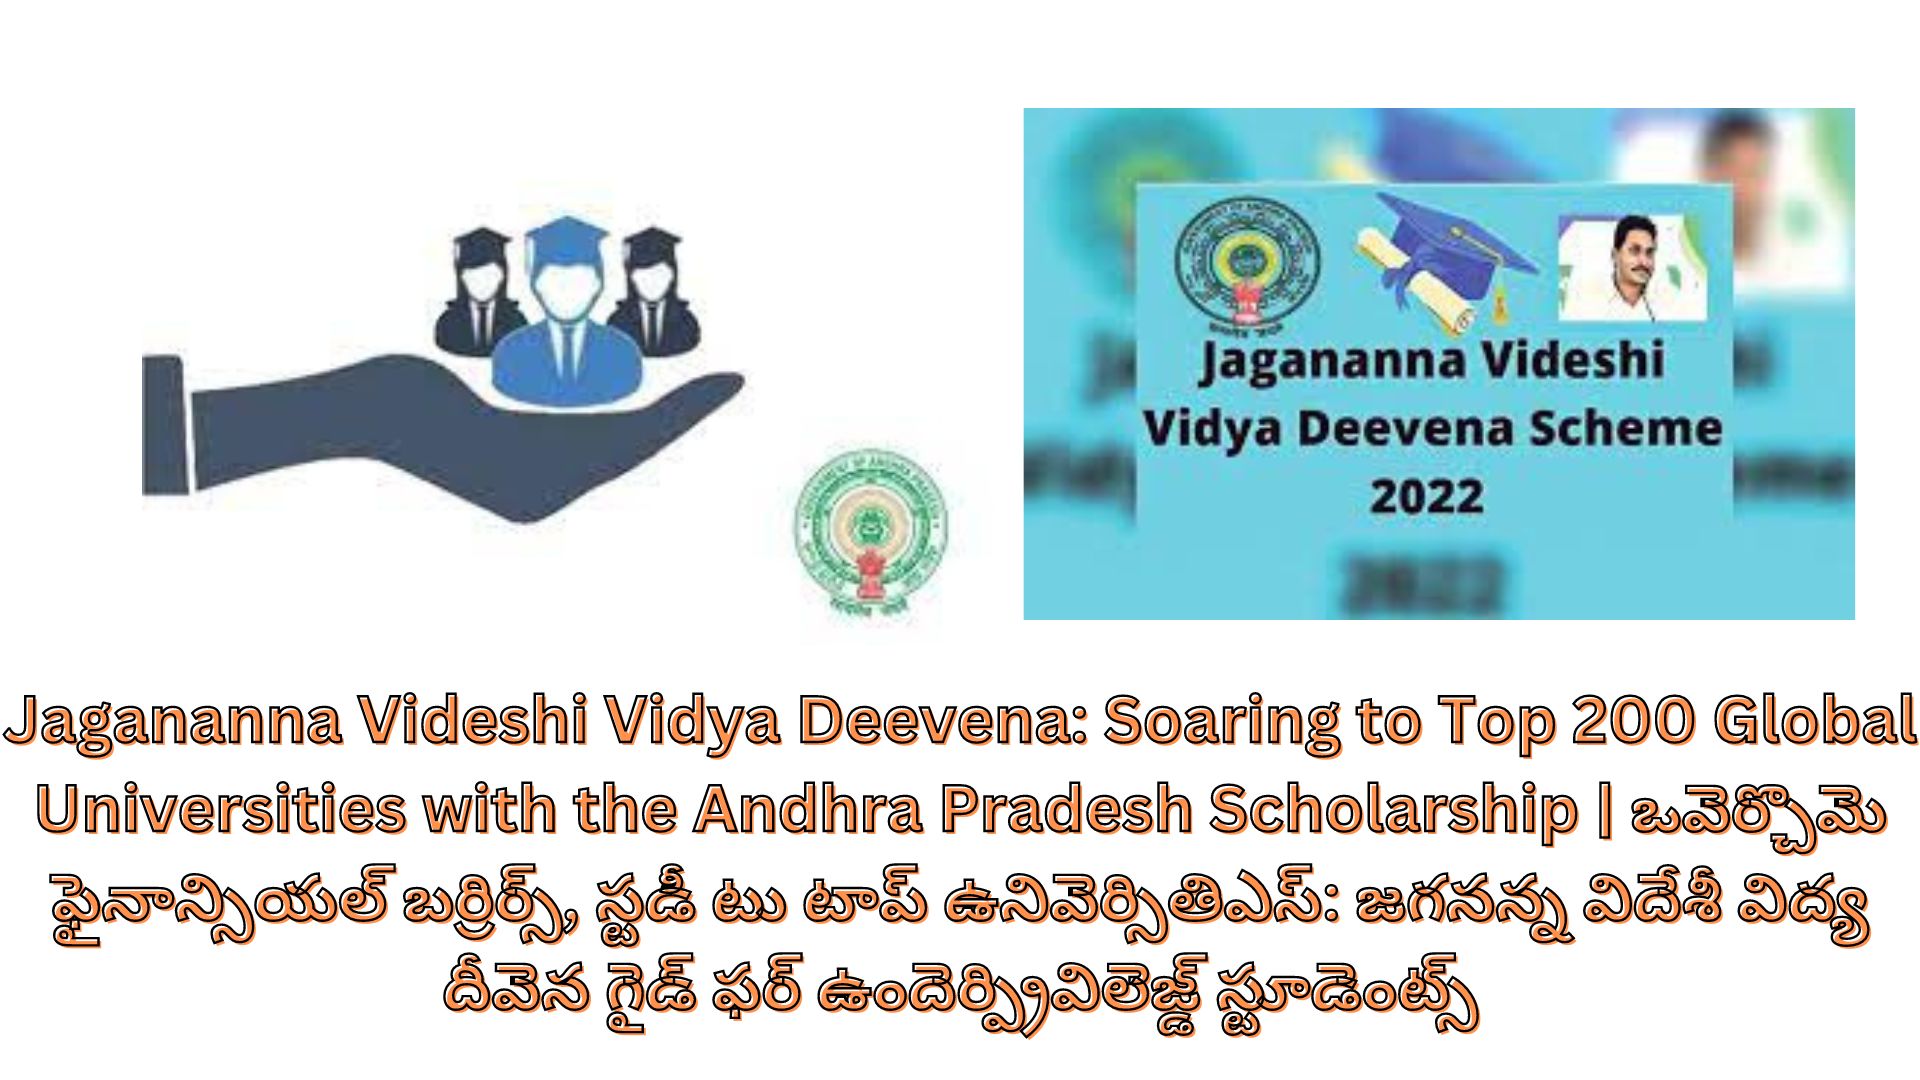 Jagananna Videshi Vidya Deevena: Soaring to Top 200 Global Universities with the Andhra Pradesh Scholarship | ఒవెర్చొమె ఫైనాన్సియల్ బర్రిర్స్, స్టడీ టు టాప్ ఉనివెర్సితిఎస్: జగనన్న విదేశీ విద్య దీవెన గైడ్ ఫర్ ఉందెర్ప్రివిలెజ్డ్ స్టూడెంట్స్